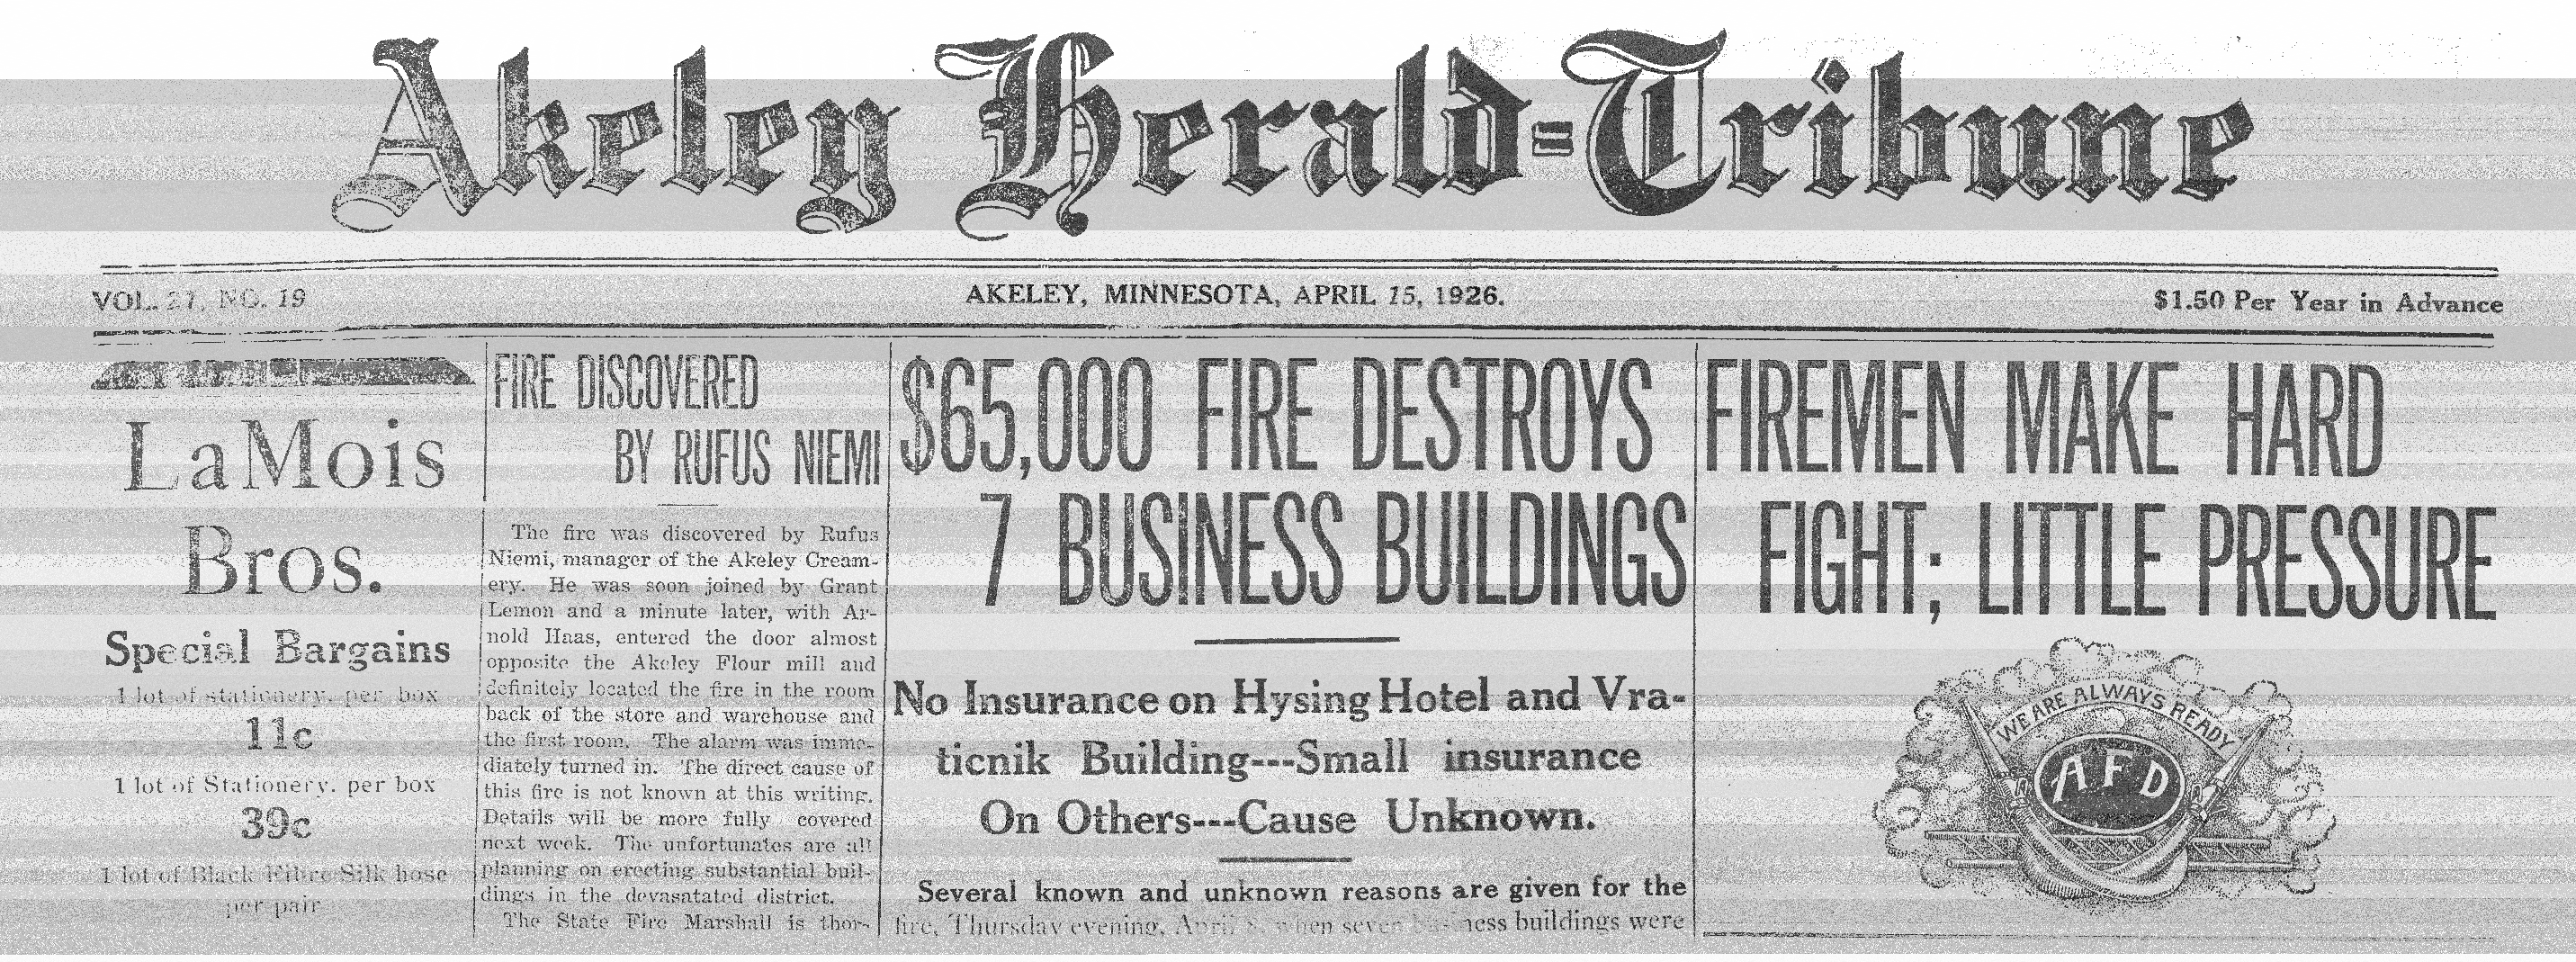 akeley herald tribune 1926 fire